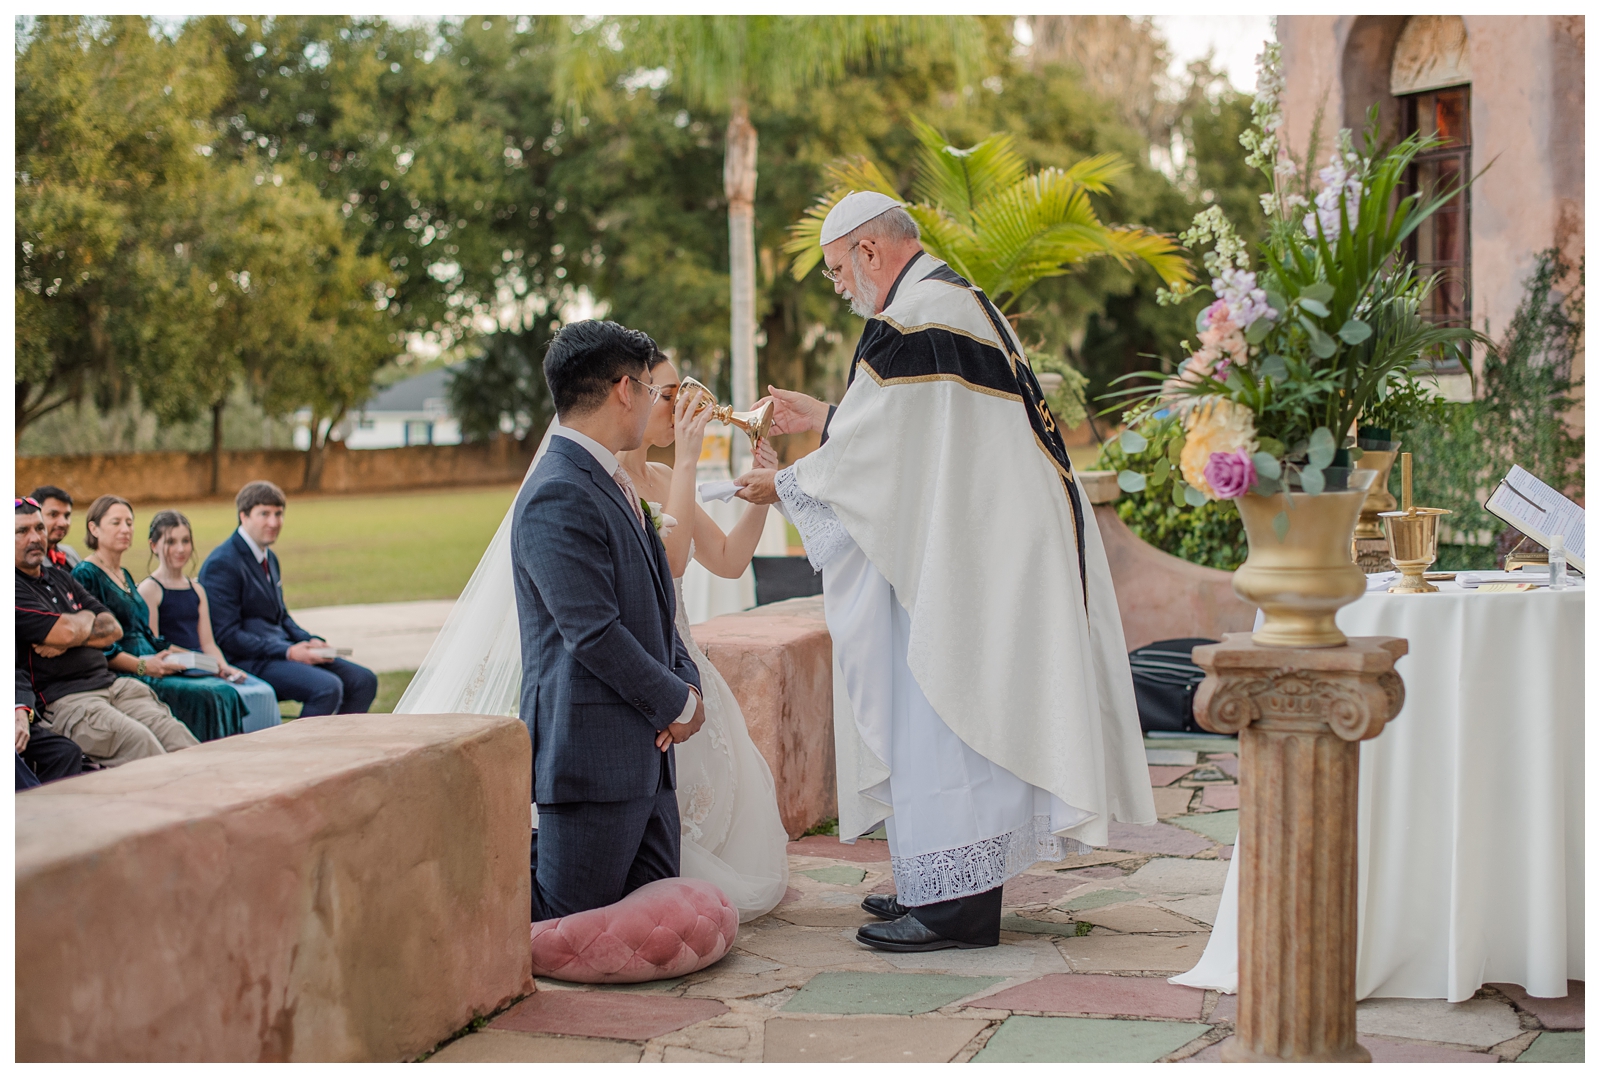 Outdoor Catholic wedding ceremony